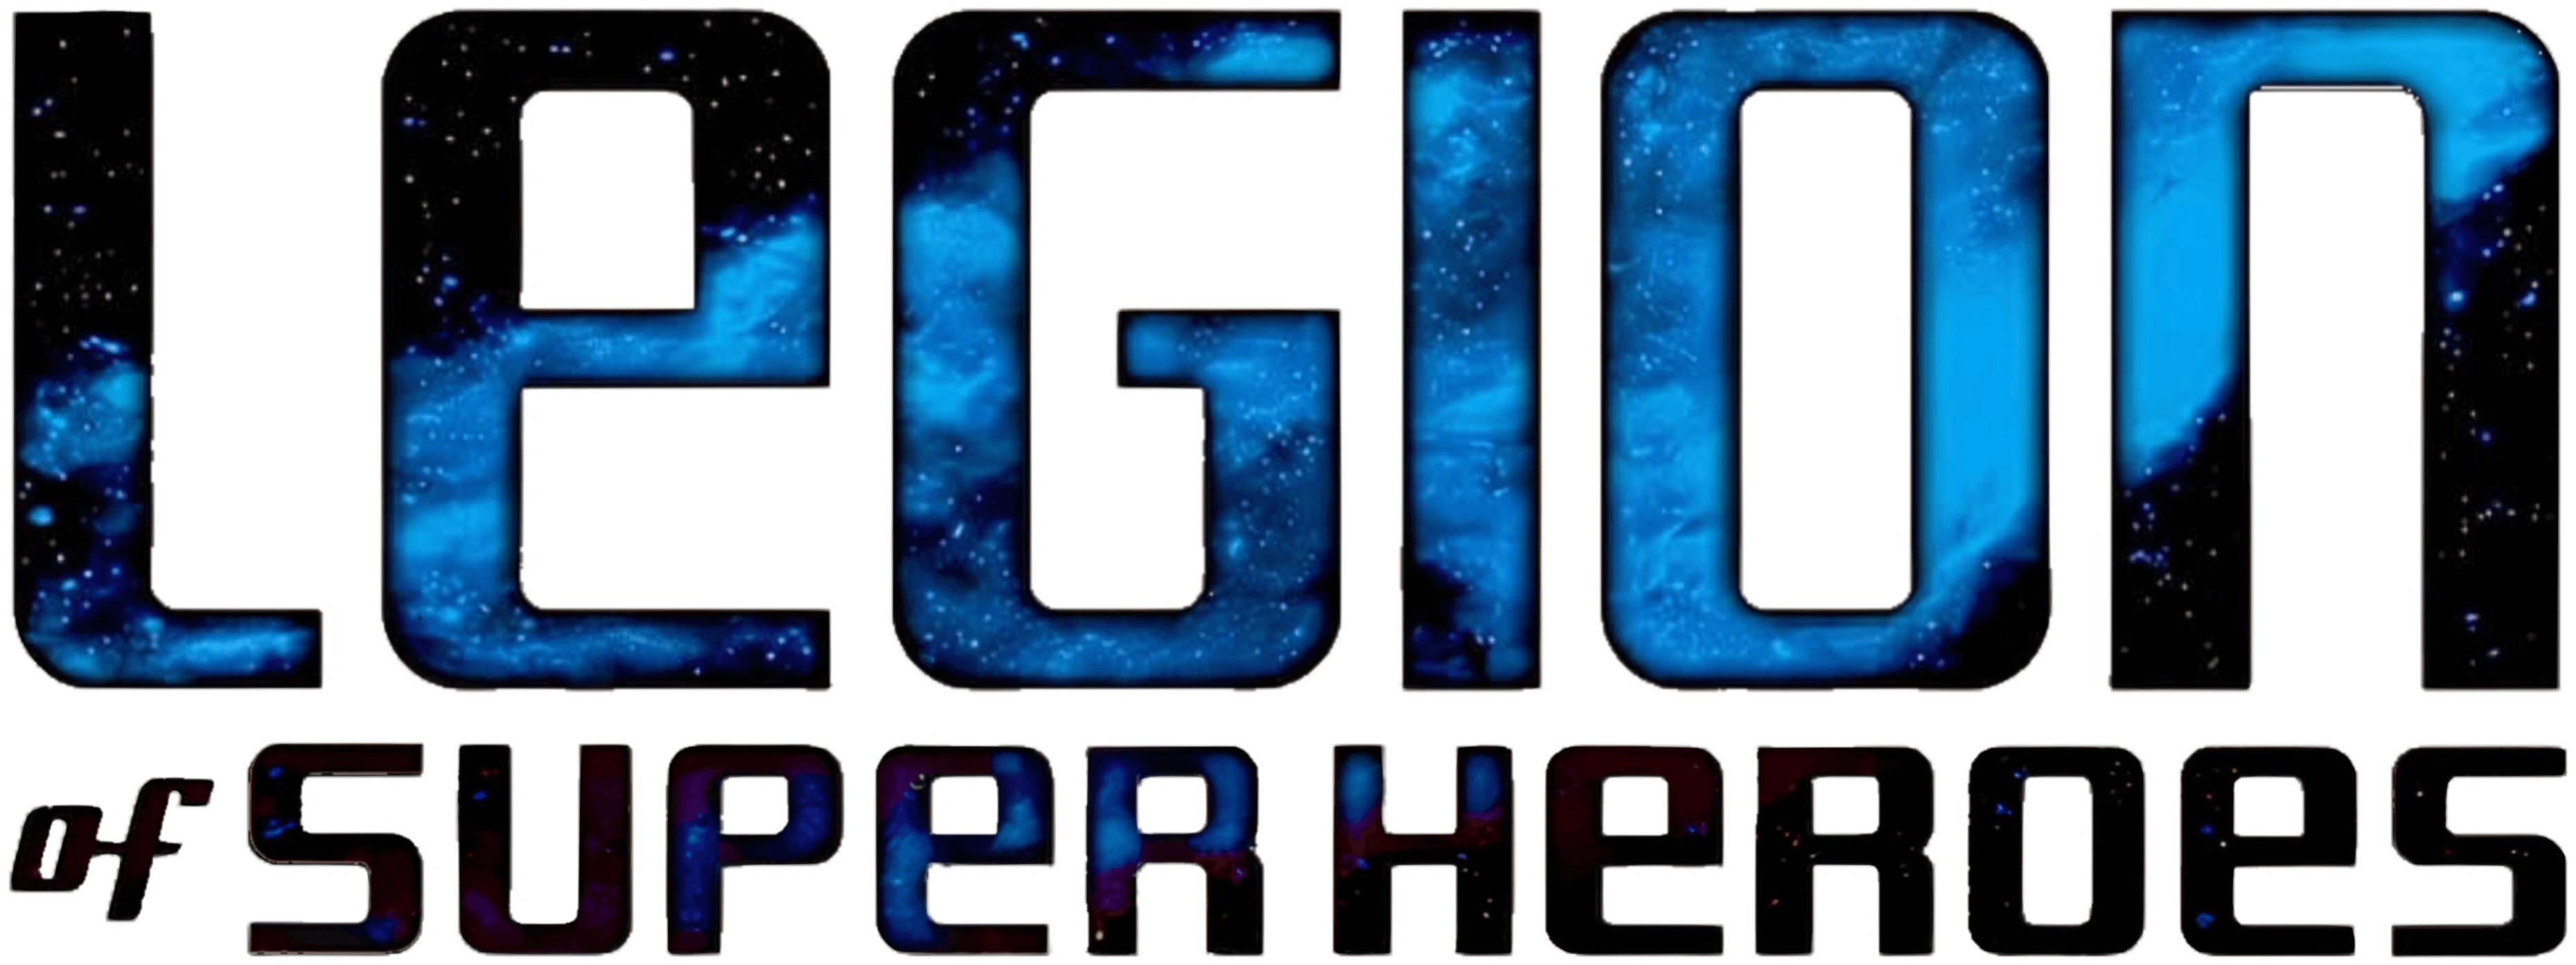 Legion of Super Heroes logo